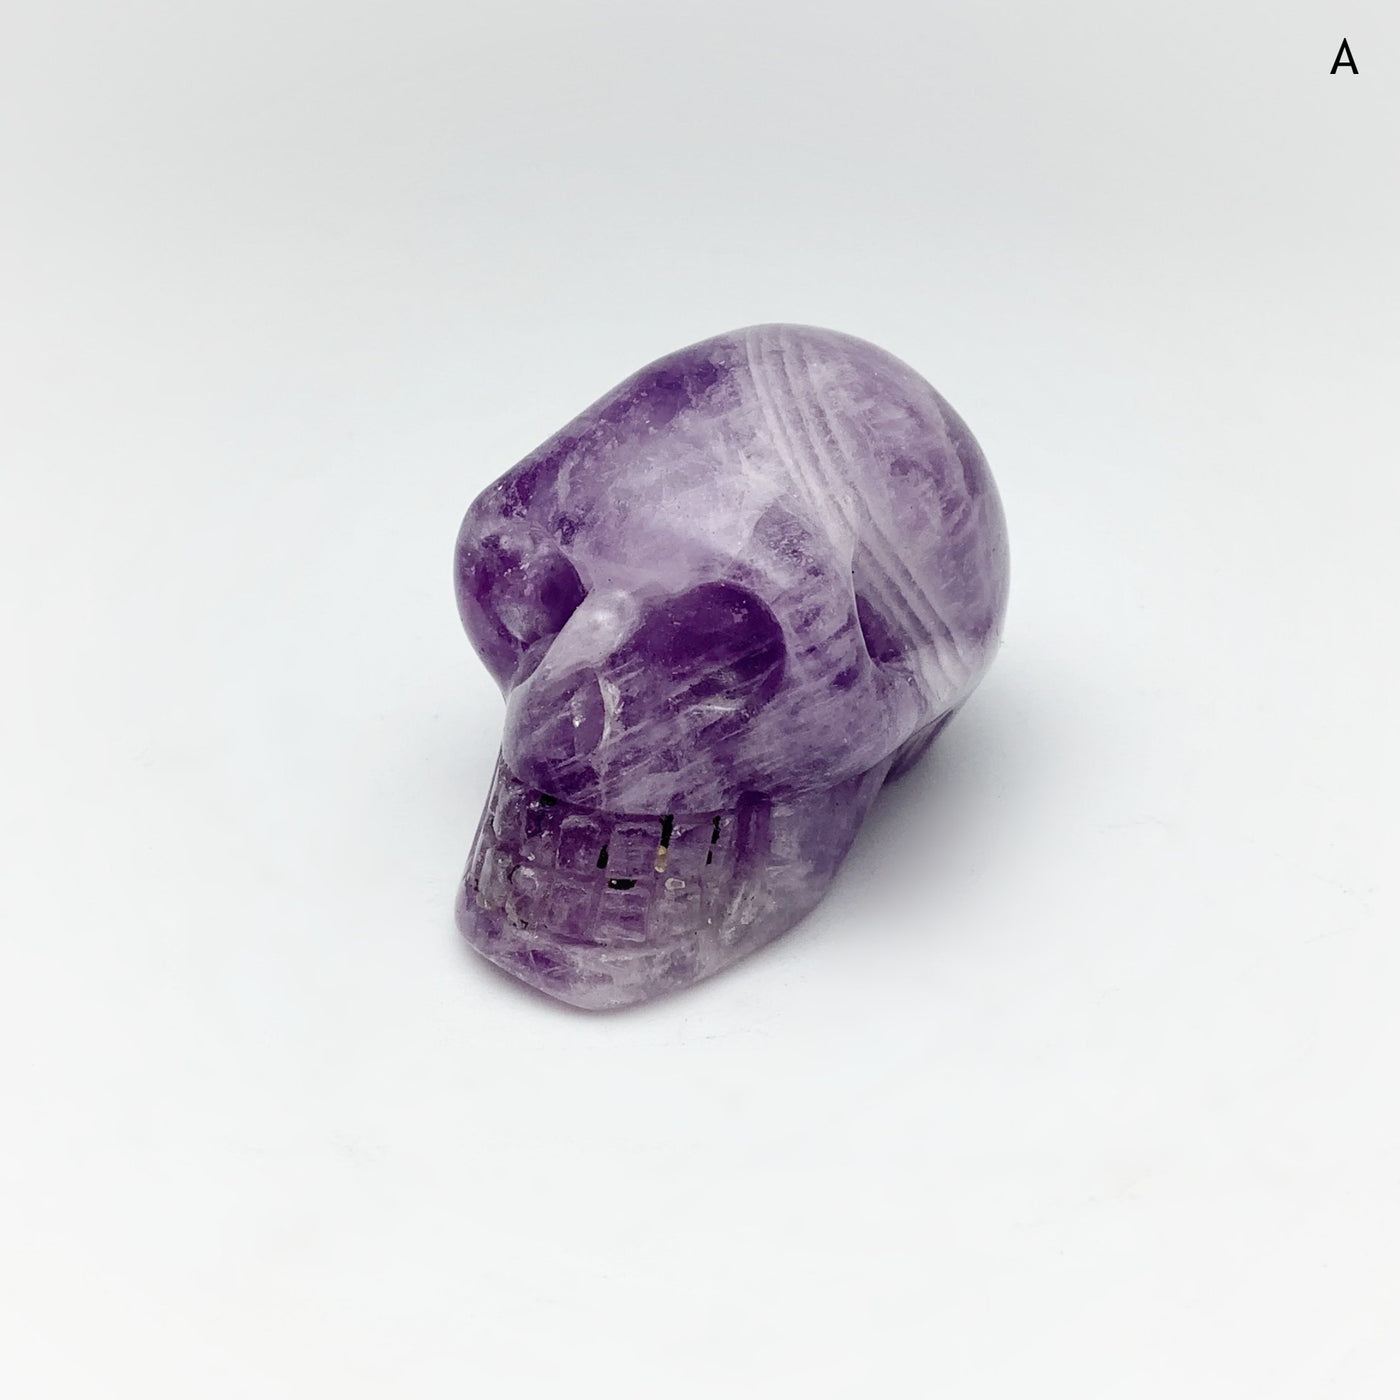 Carved Chevron Amethyst Skull at $49 Each